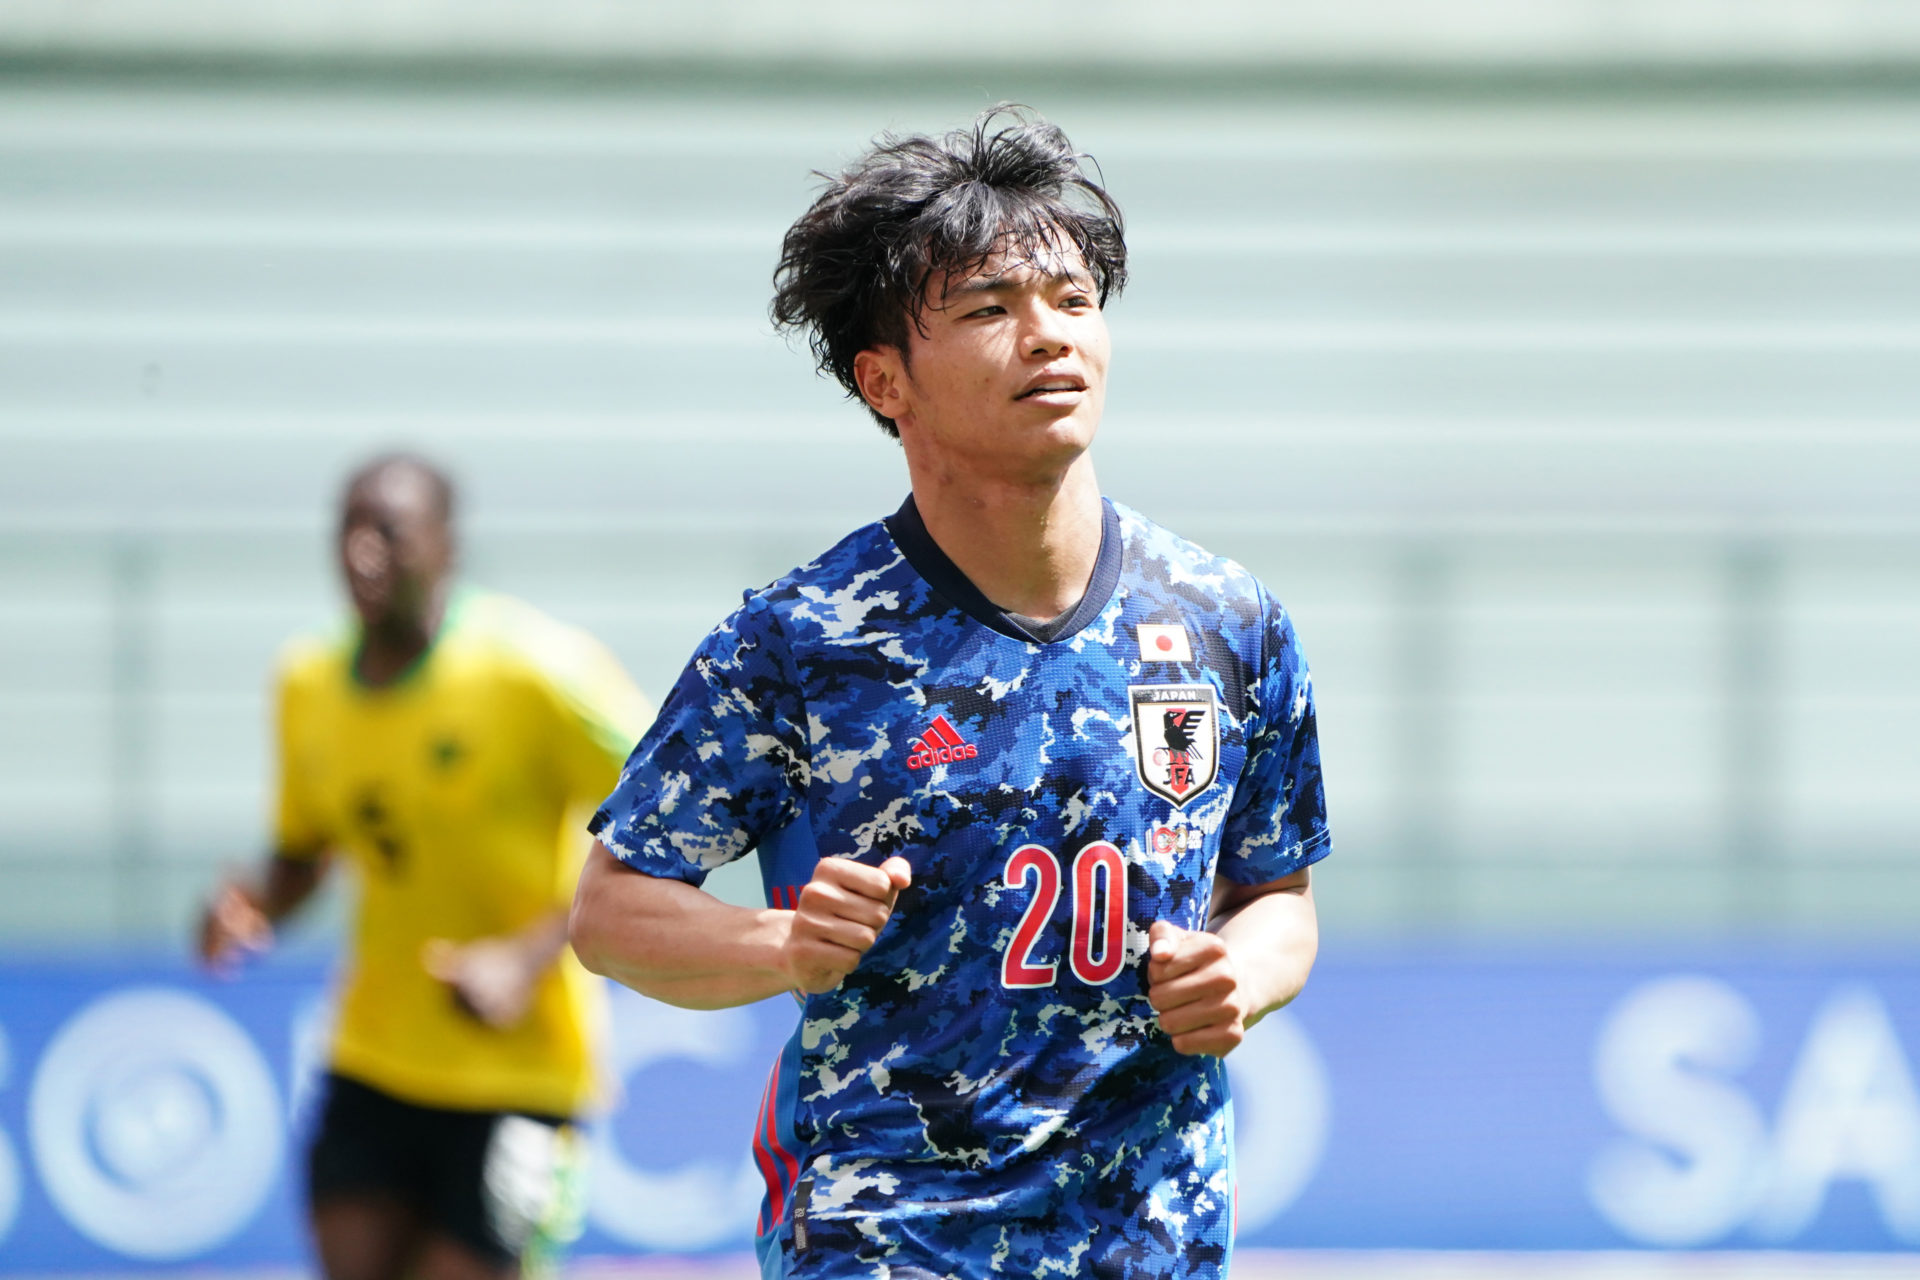 Japan U-24 v Jamaica - International Friendly